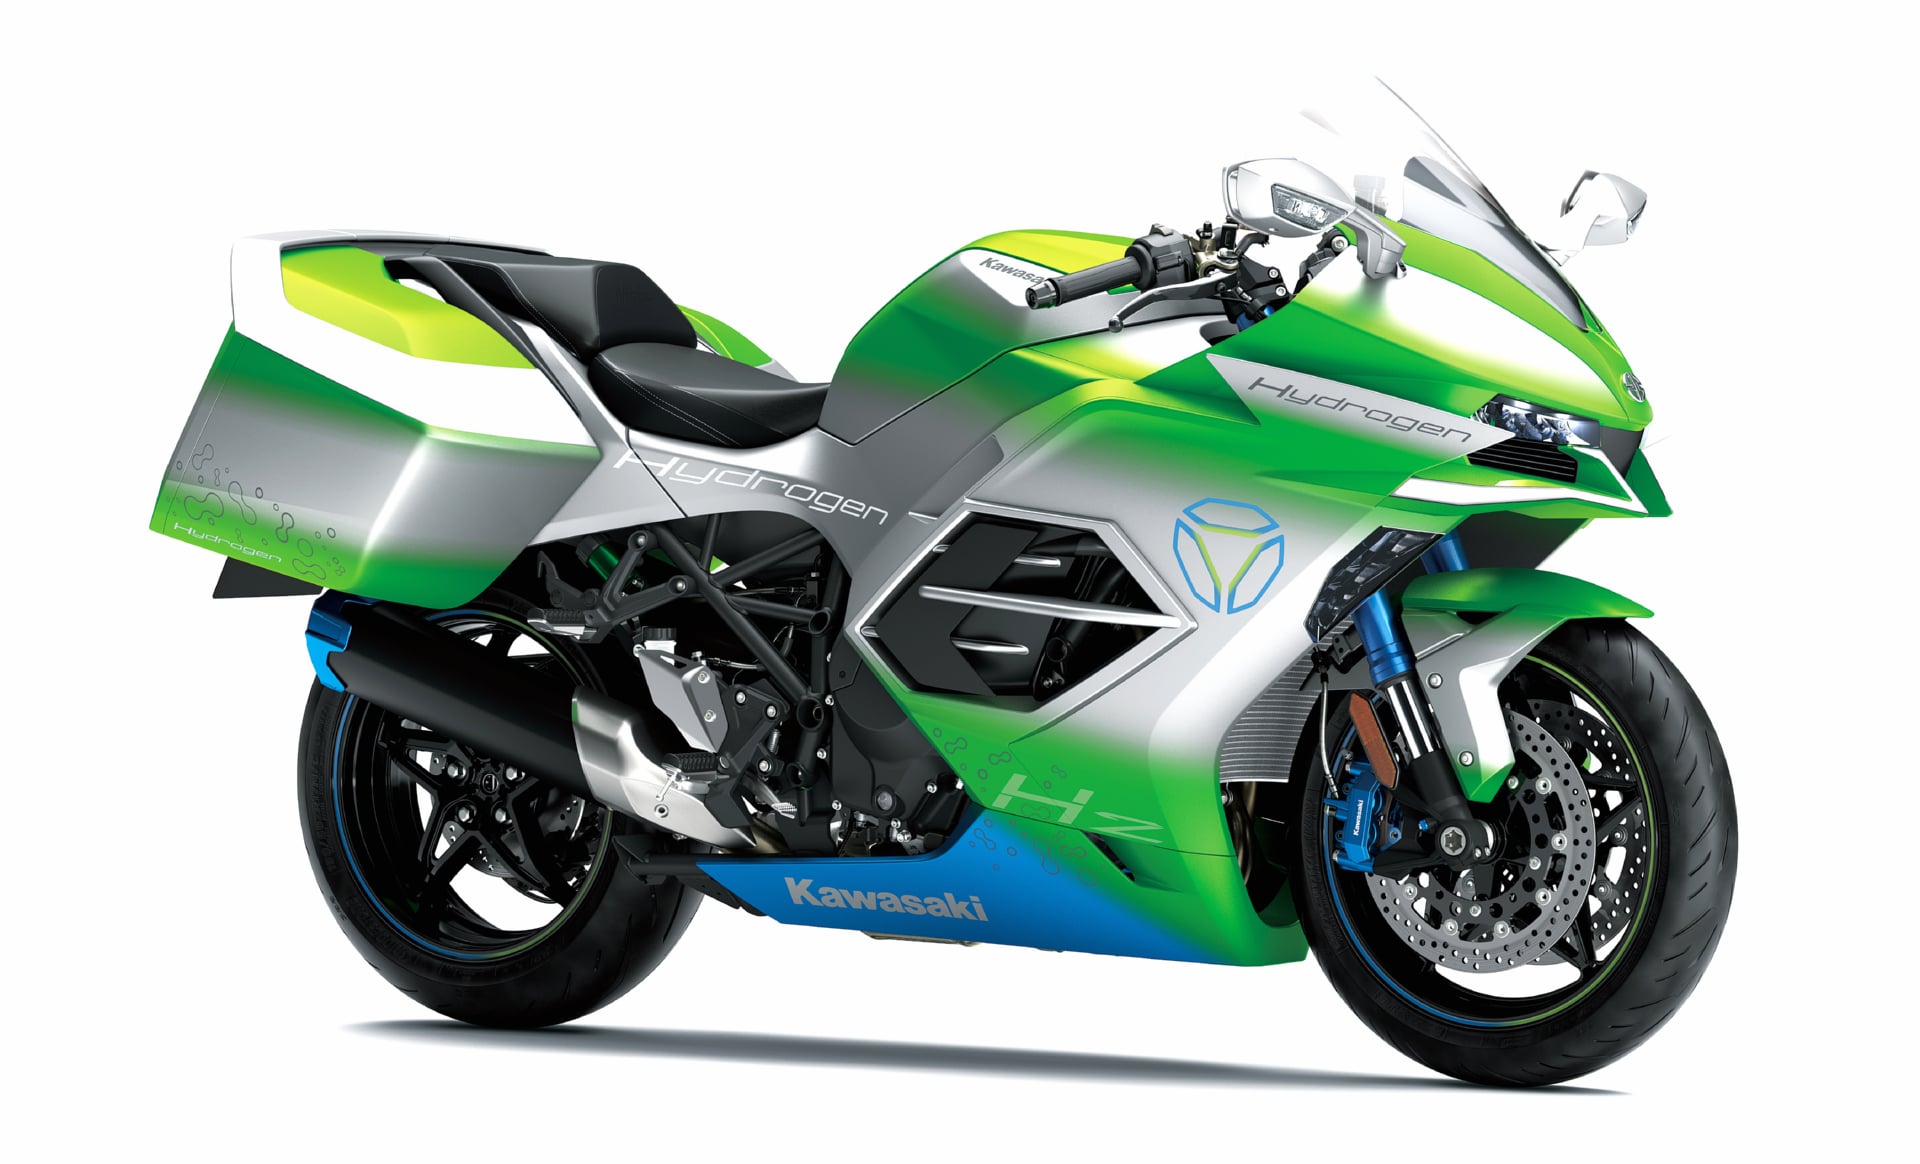 Kawasaki Hydrogen Motorcycle at 1024 x 1024 iPad size wallpapers HD quality